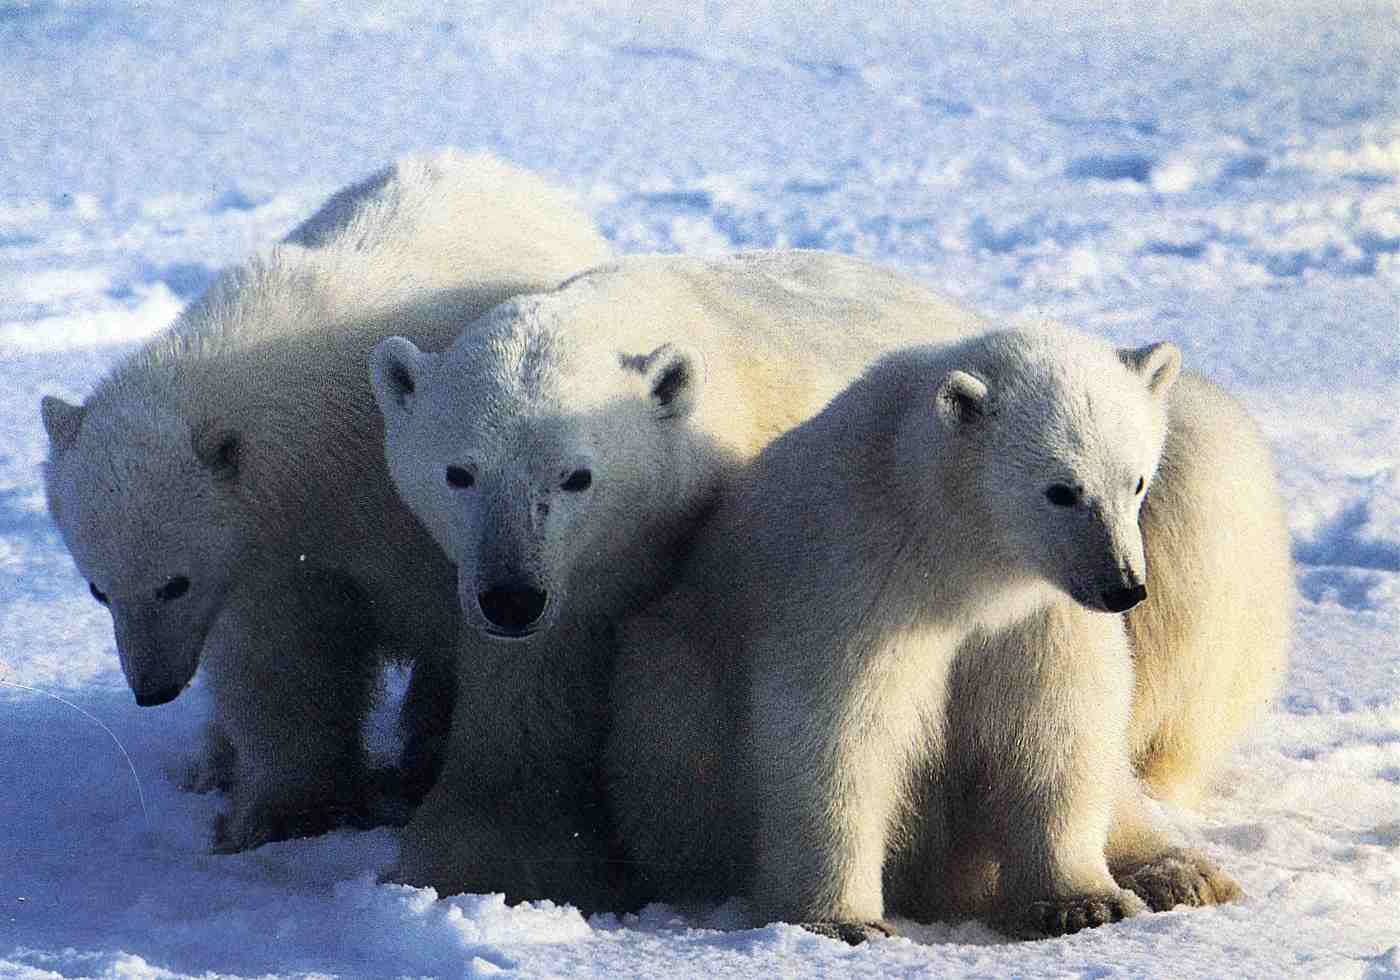 Arctic wildlife